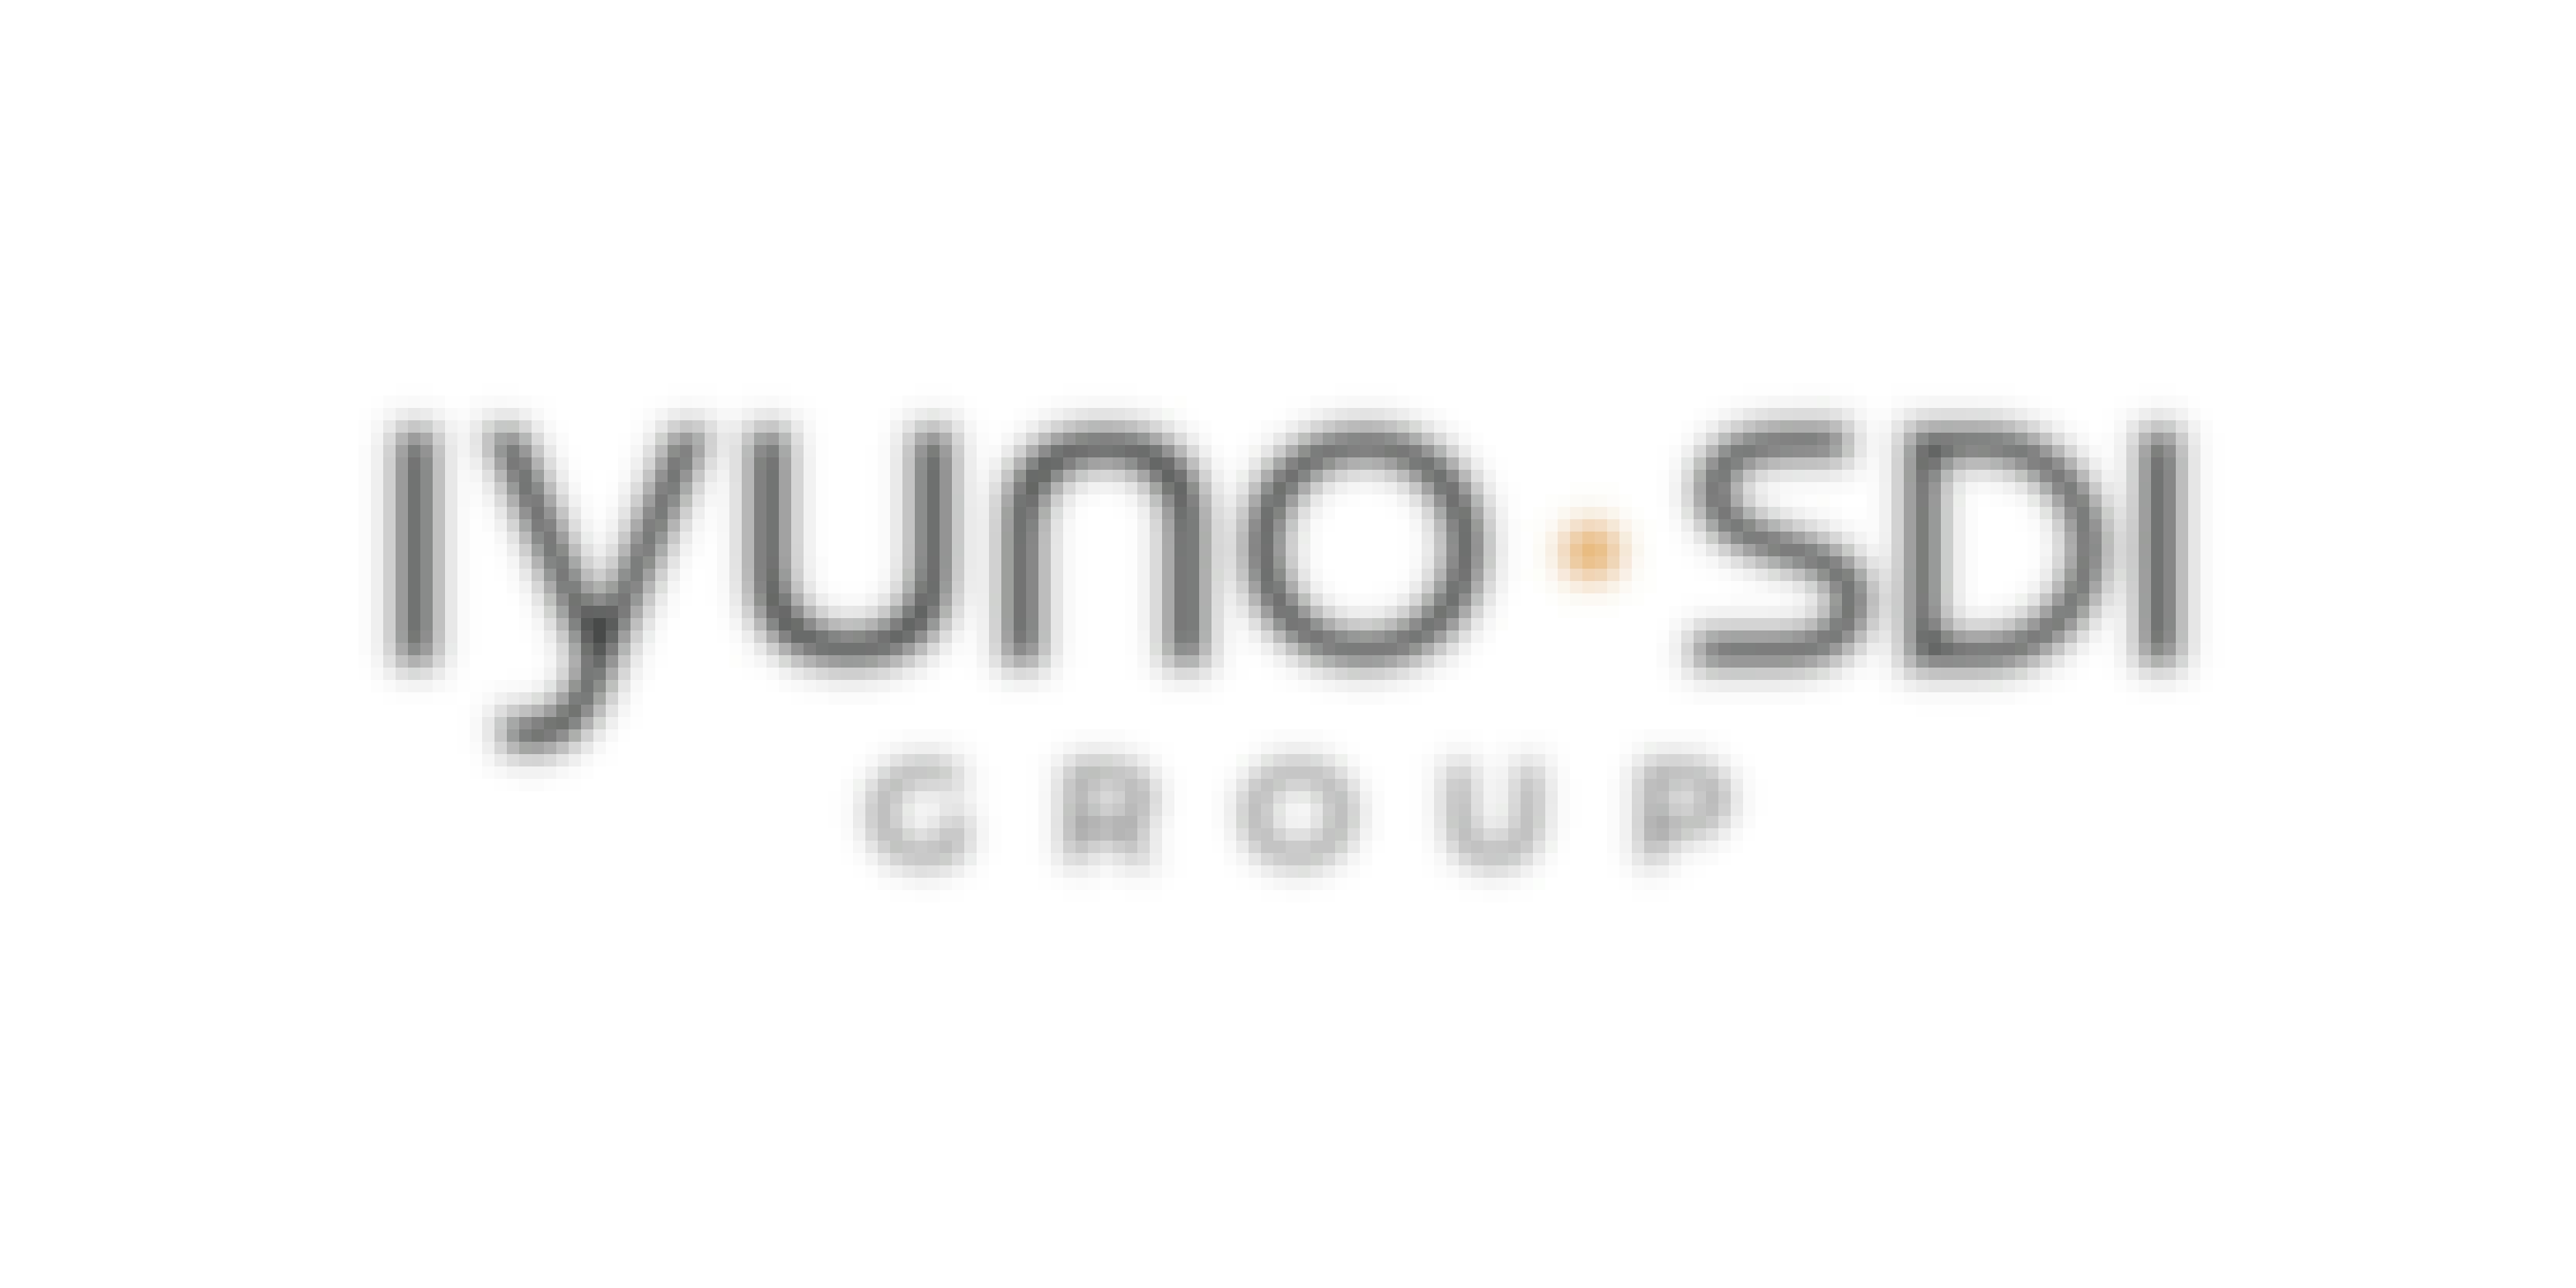 Iyuno-SDI Group reveals new logo.